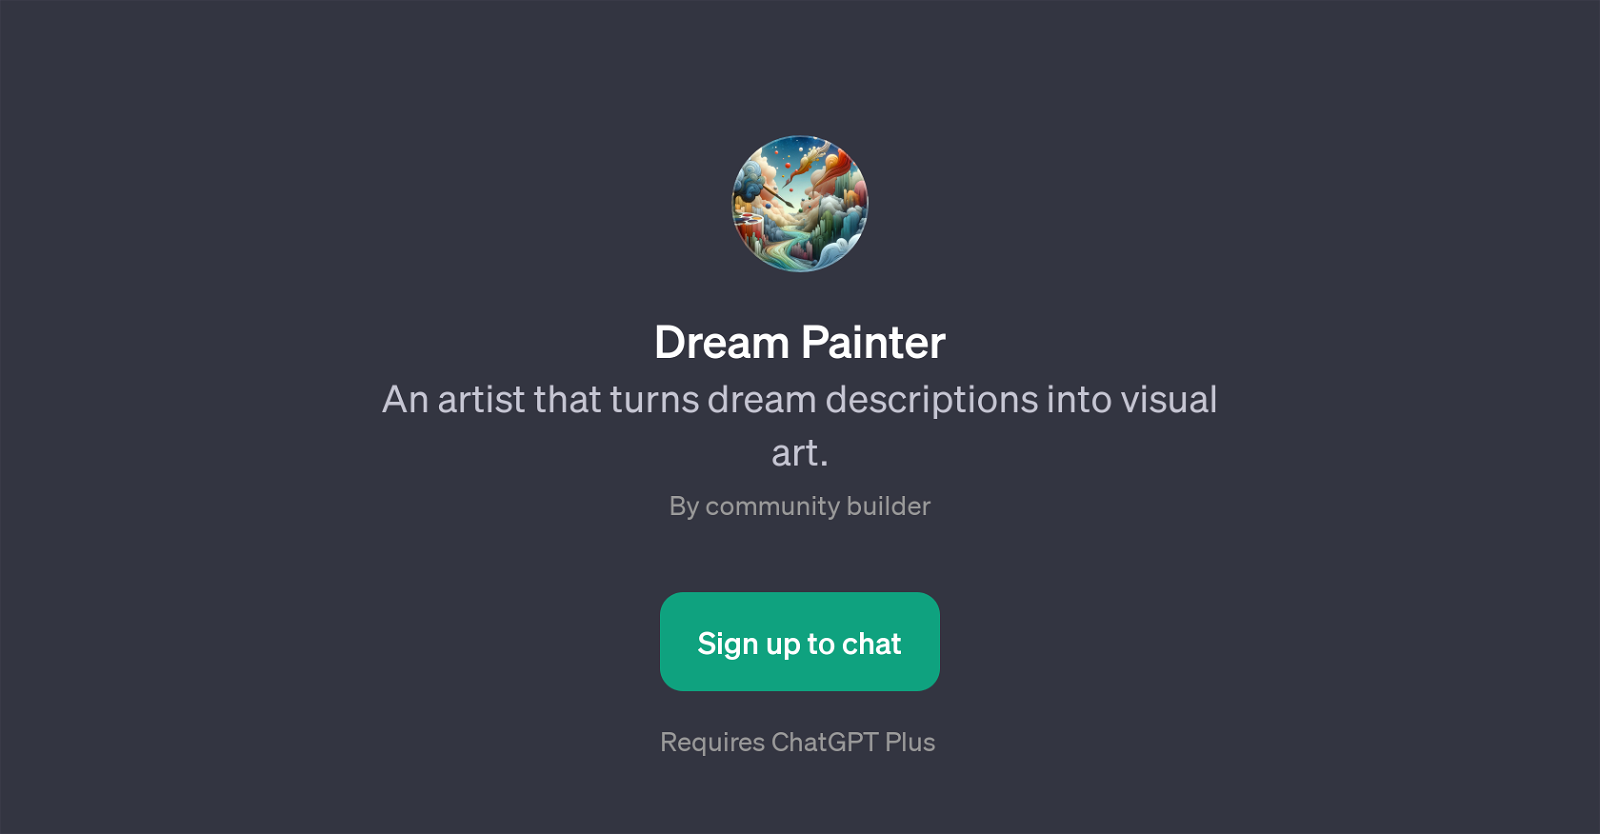 Dream Painter website